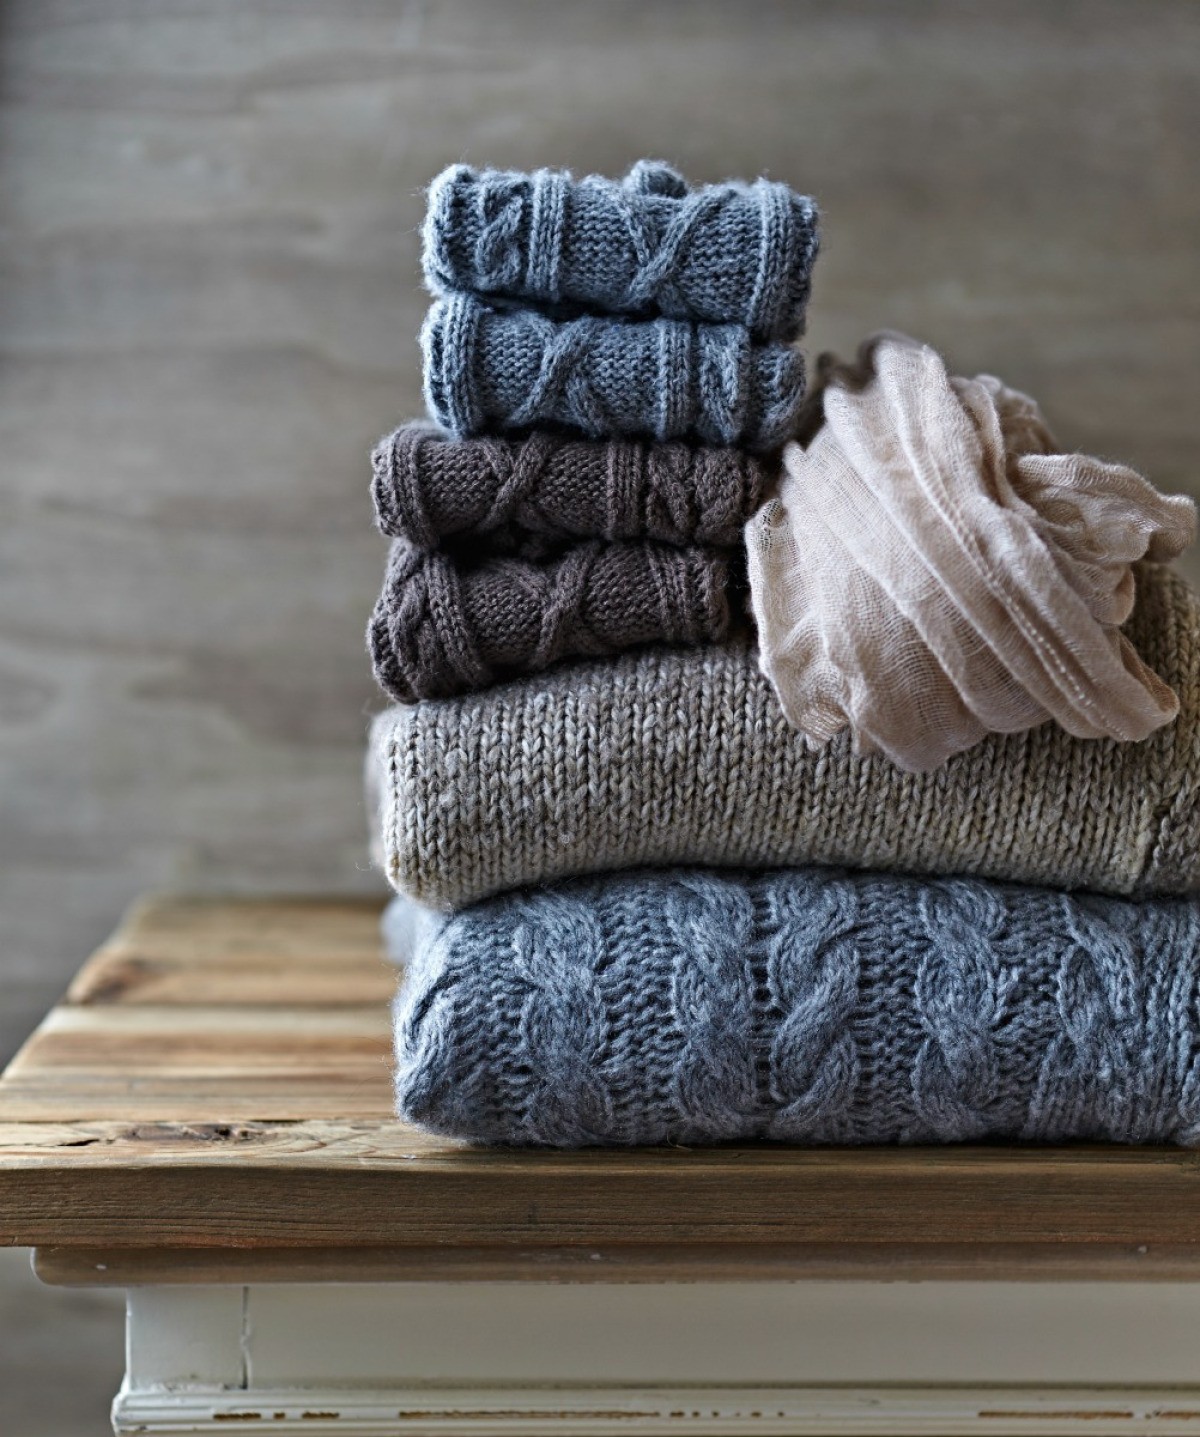 Washing Wool Clothing? | ThriftyFun